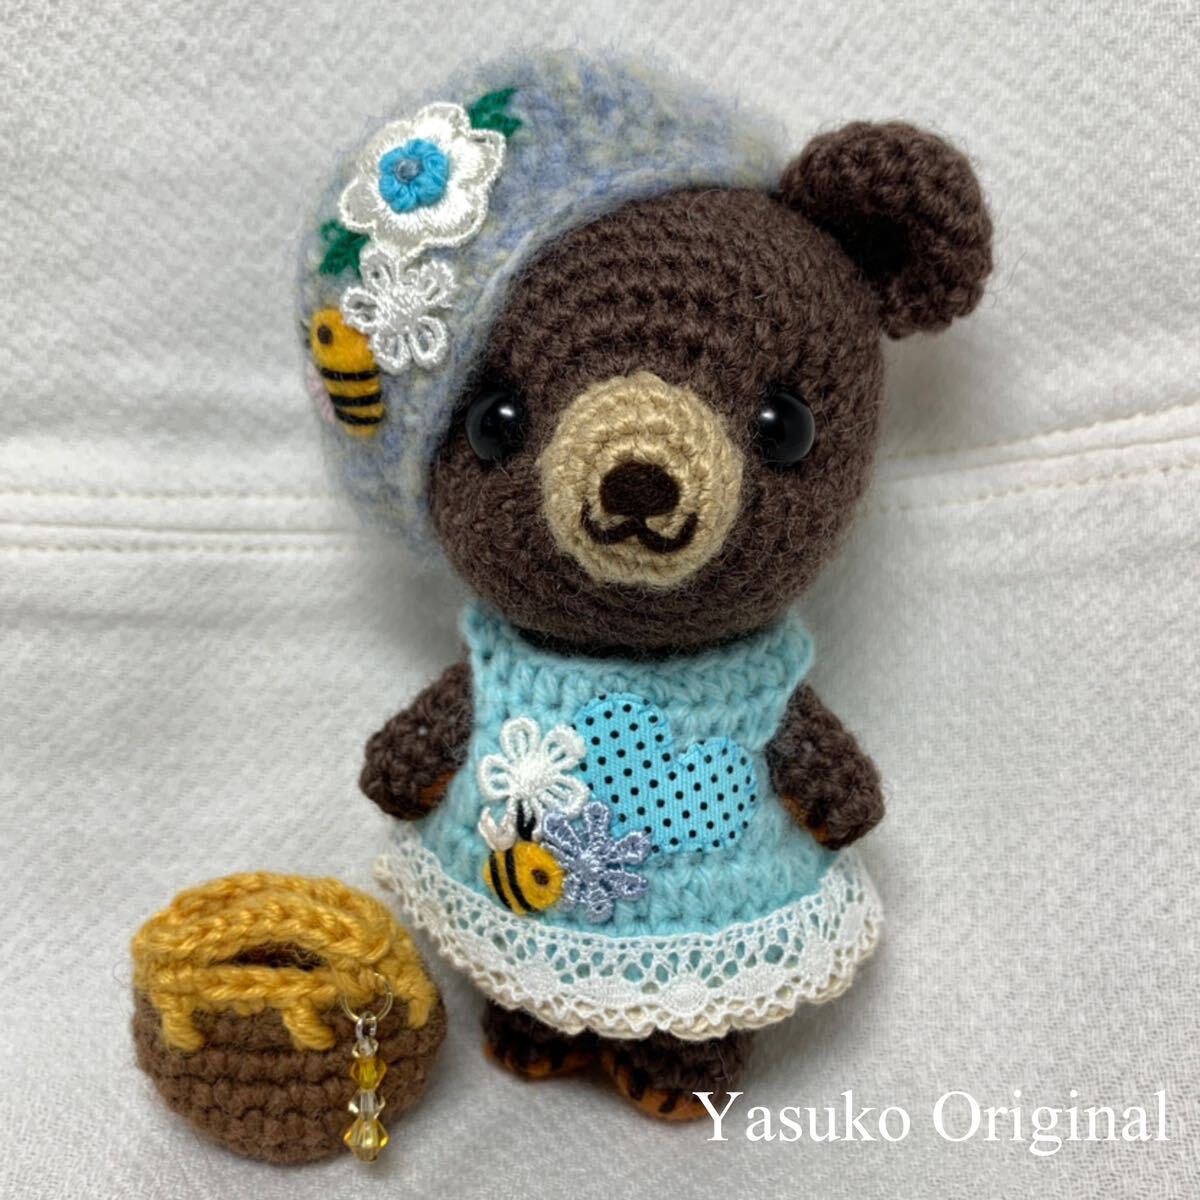 Yasuko's Amigurumi Shop ◆ Bear No. 3970 ◆ Small size ◆ Bear ◆ Flowers and bees ◆ Amigurumi ◆ Handmade ◆ Hand-knitted, toy, game, stuffed toy, Amigurumi